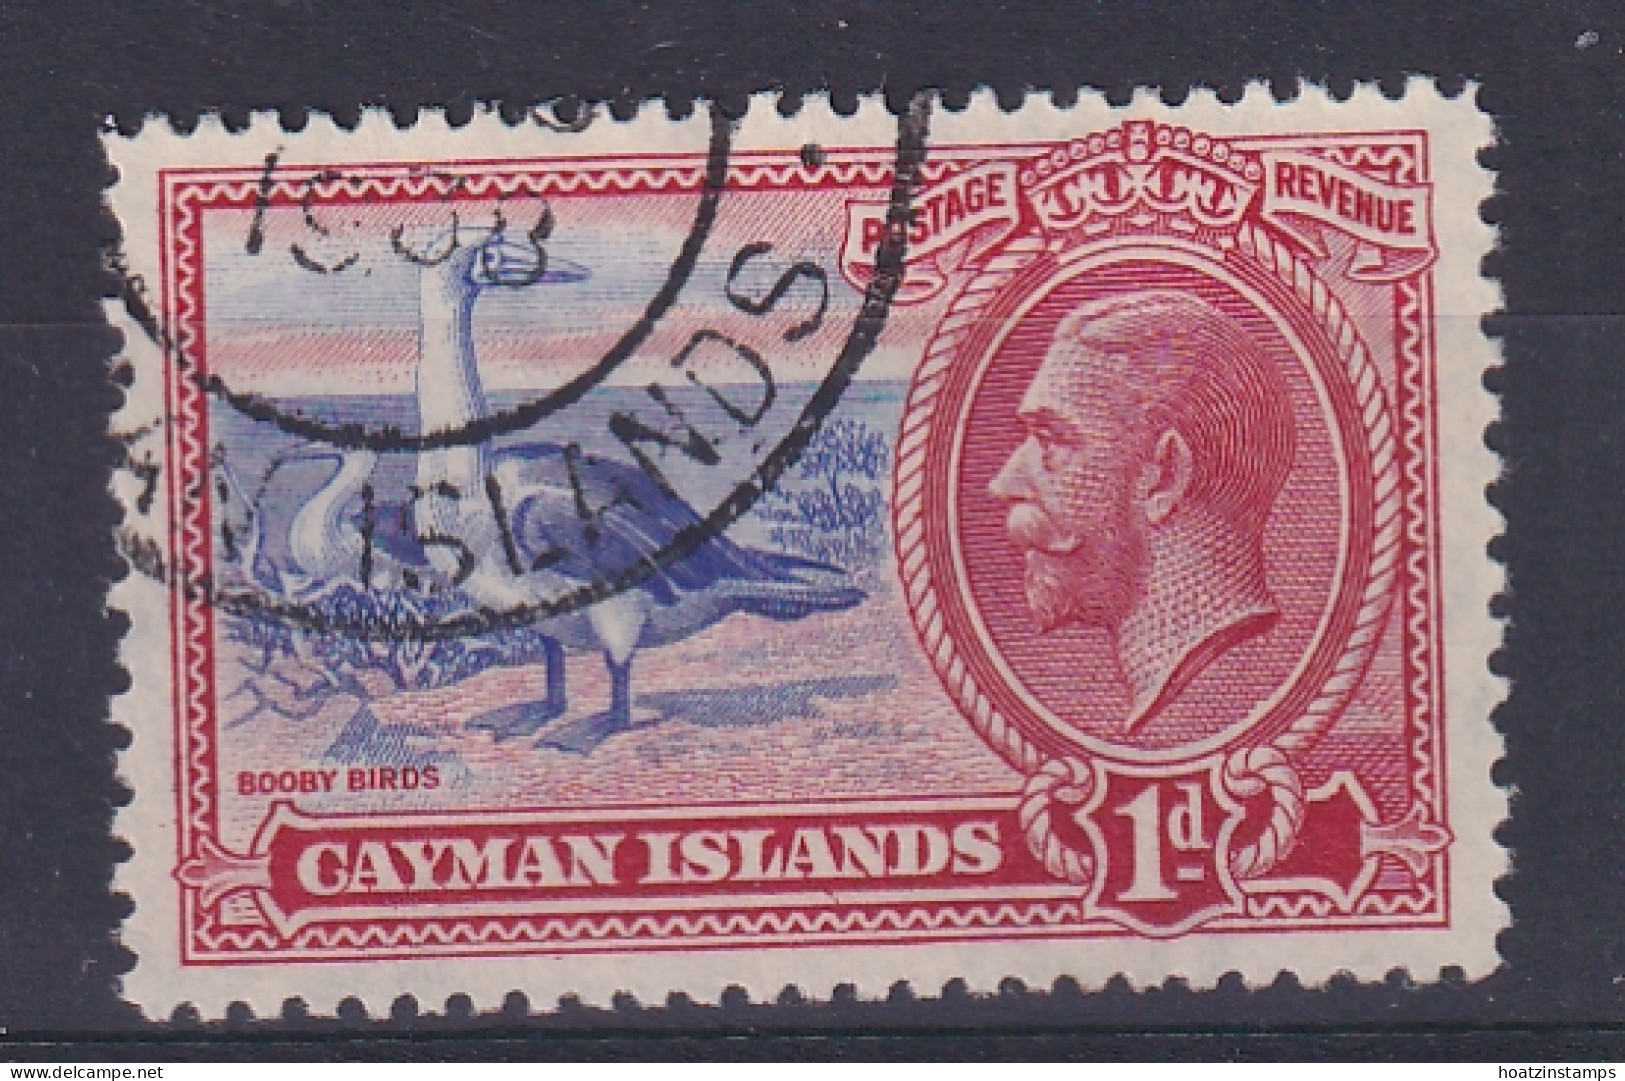 Cayman Islands: 1935   KGV - Pictorial   SG98   1d     Used - Iles Caïmans